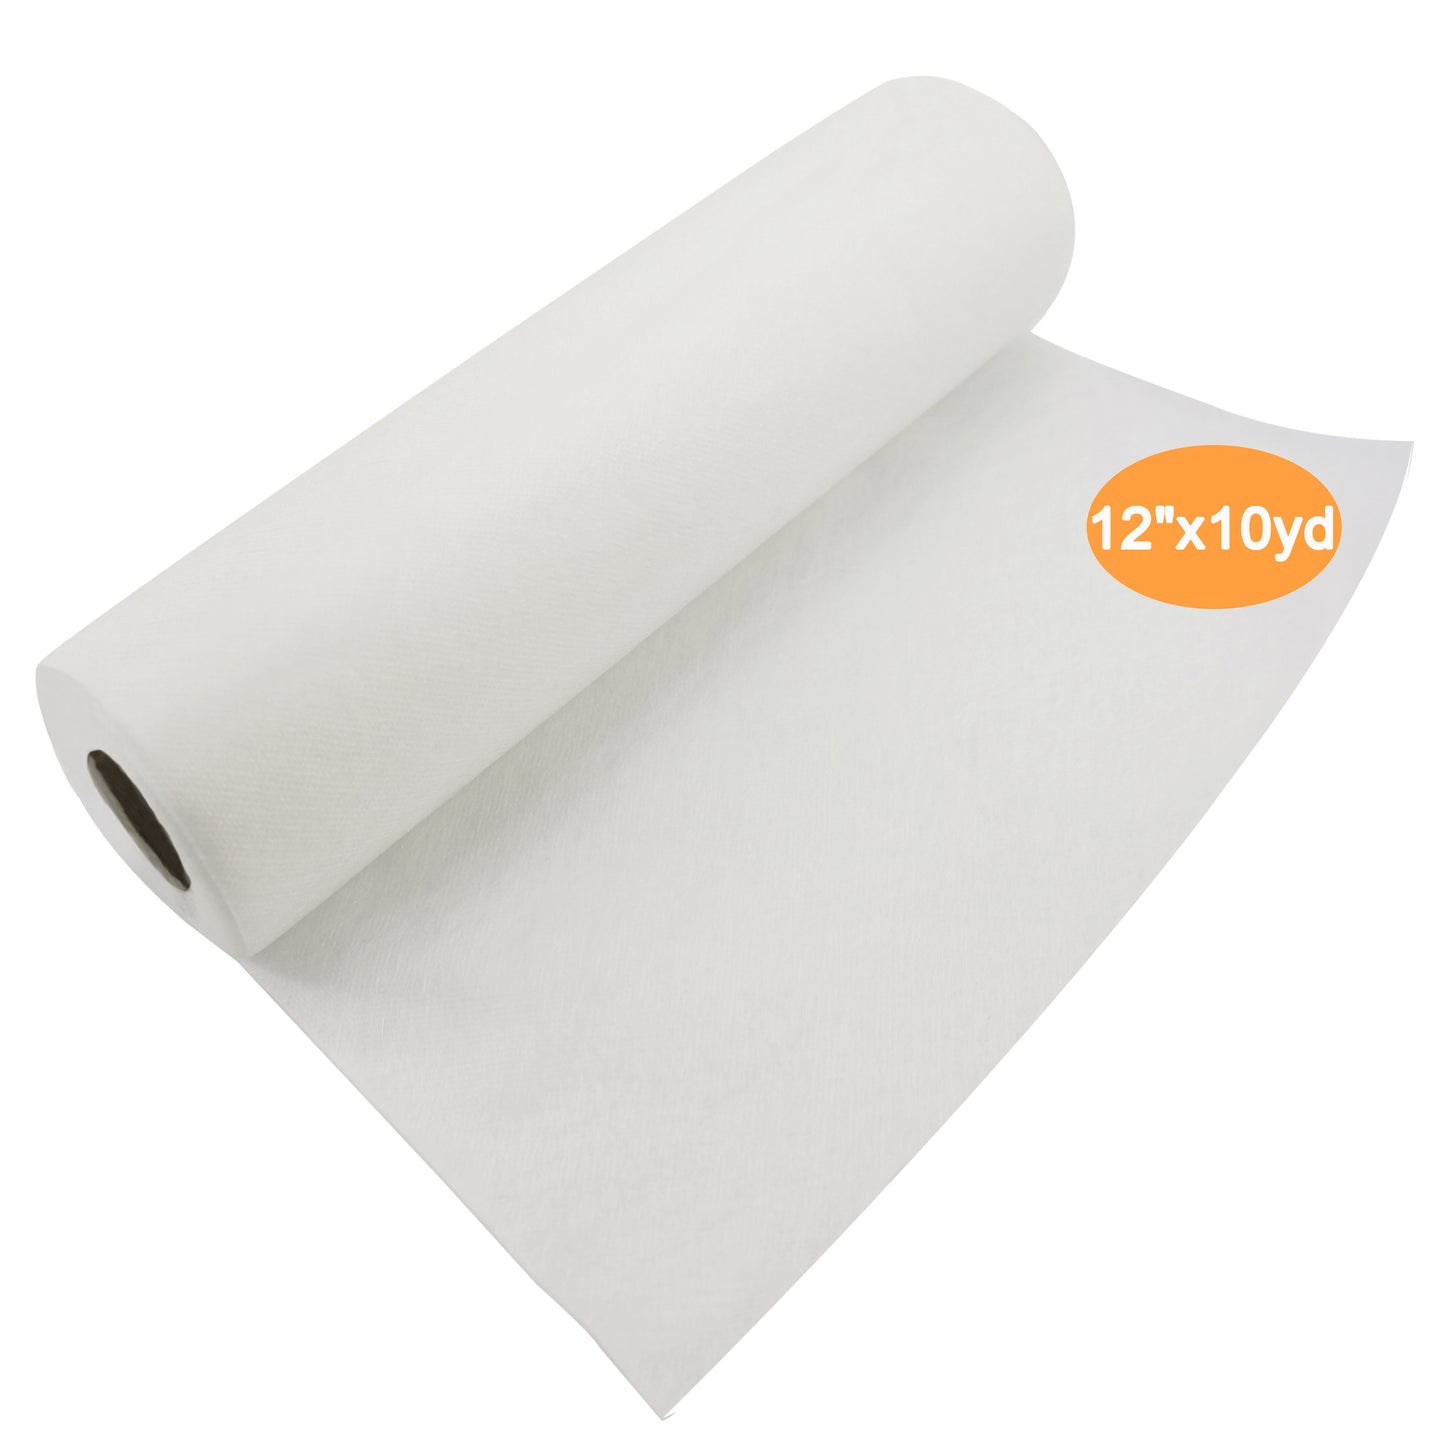 Wash Away Fabric Stabilizer - 1 Metre Lot(s)